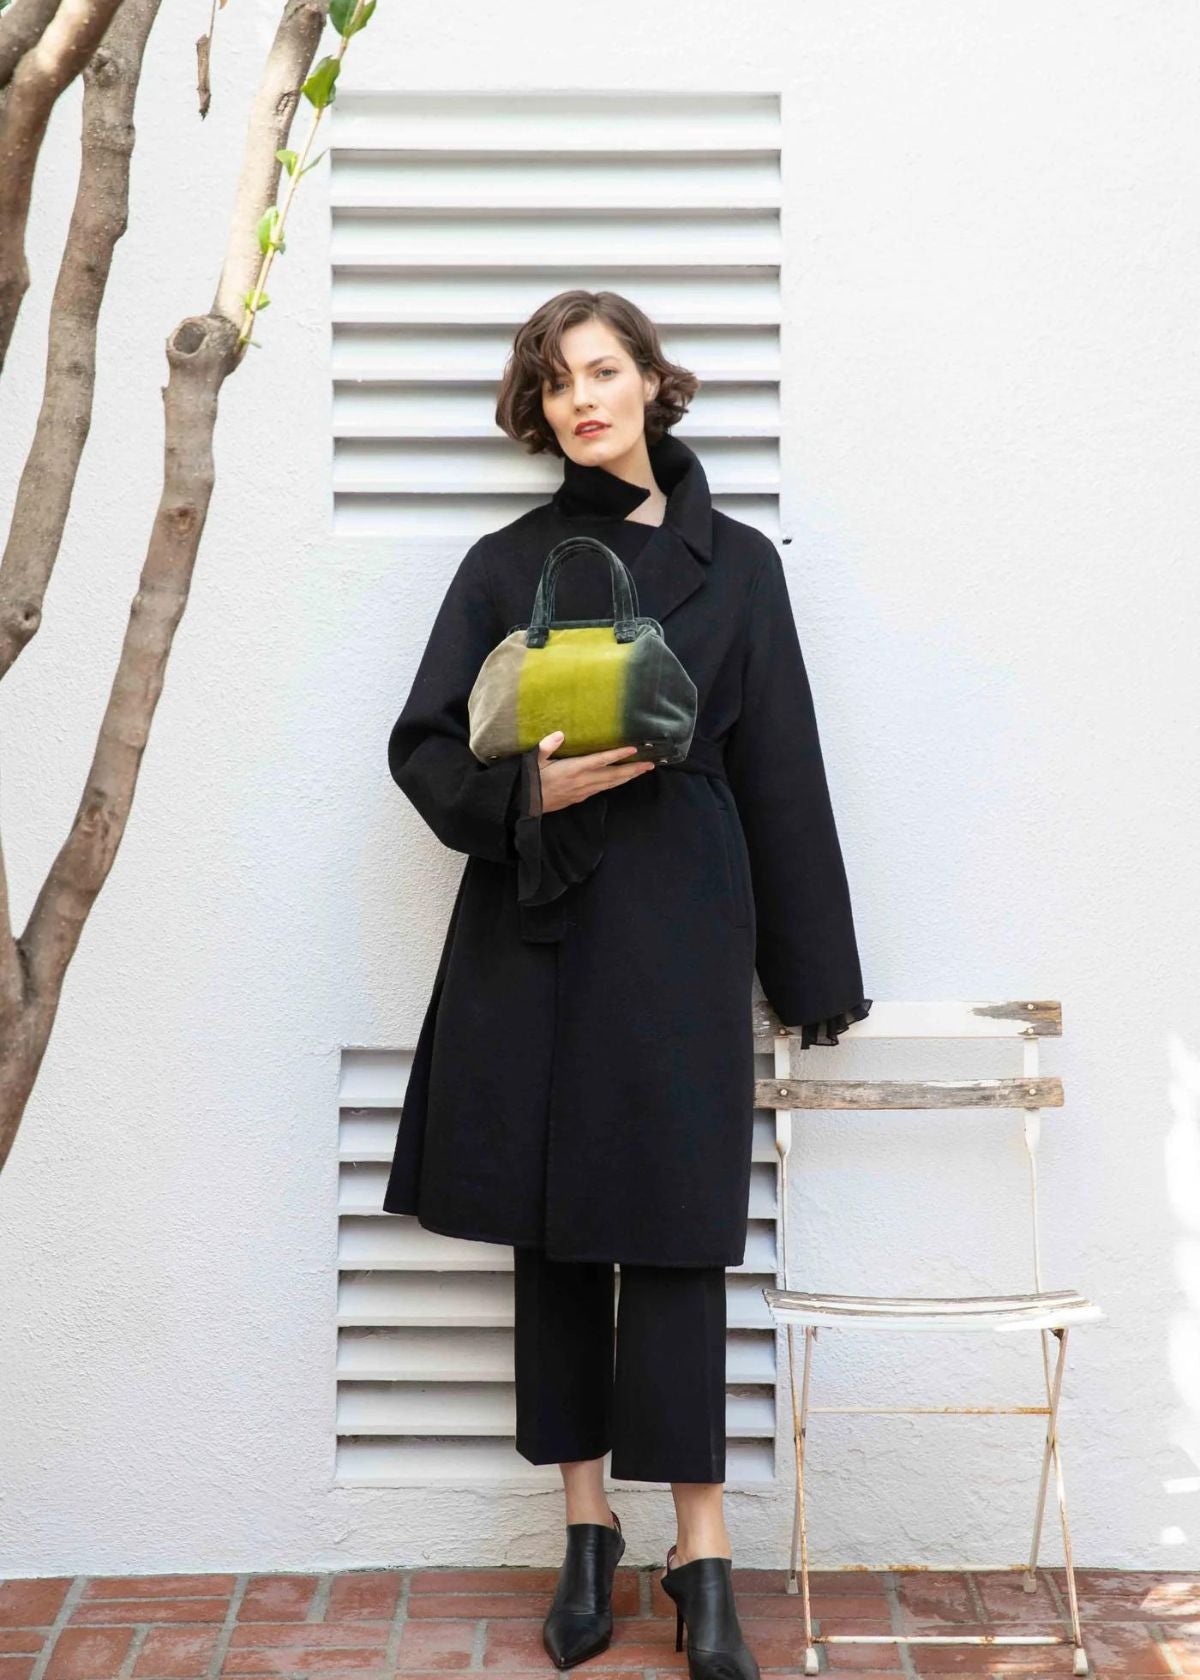 MARIAN PAQUETTE Alexandra Velvet Ombre Handbag - Charcoal and Green